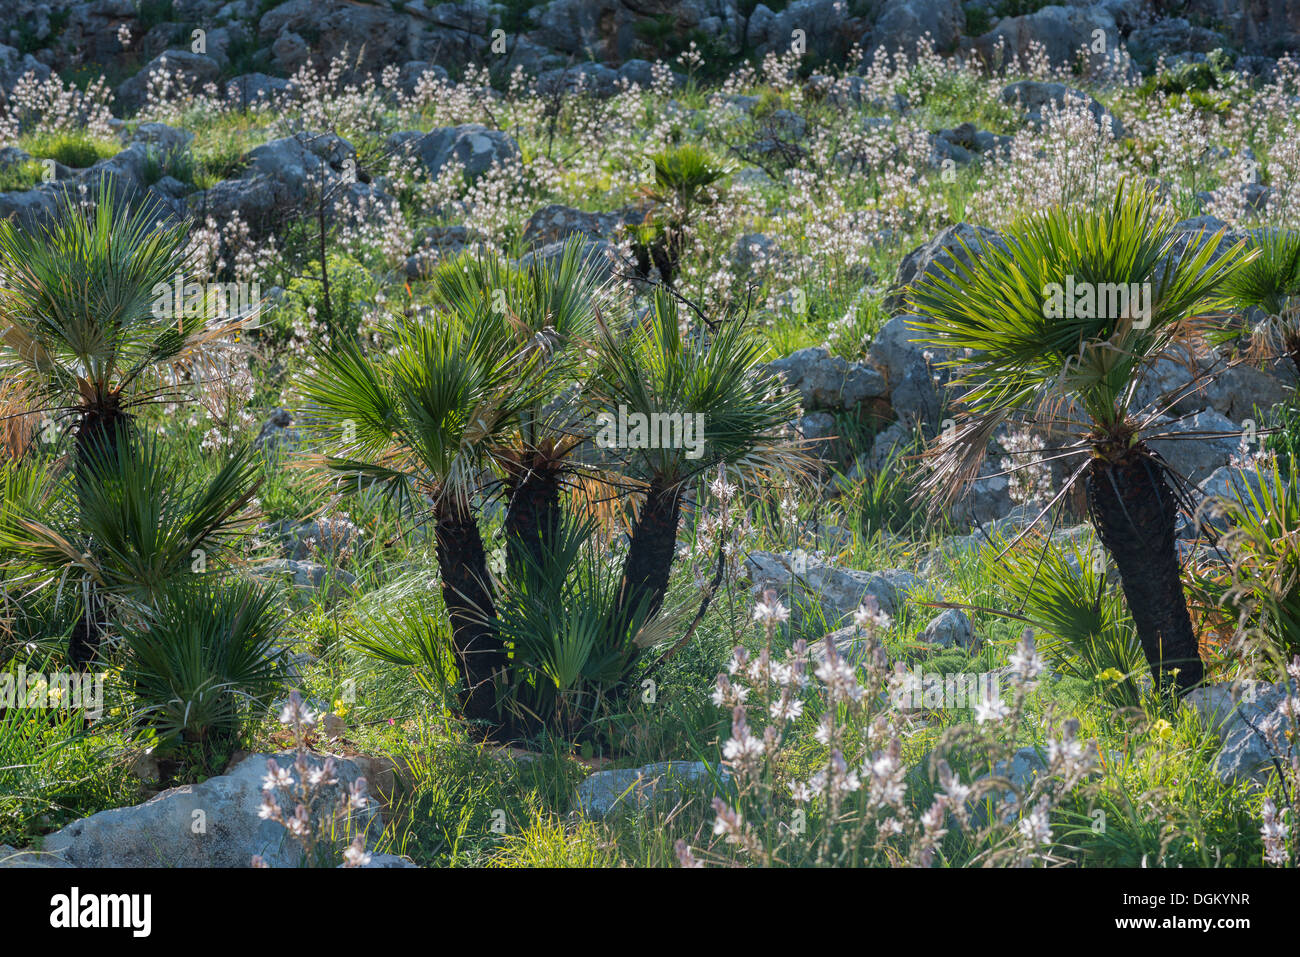 European fan palm, Mediterranean dwarf palm or Dwarf Fan Palm (Chamaerops humilis) and Branched Asphodel (Asphodelus ramosus) Stock Photo